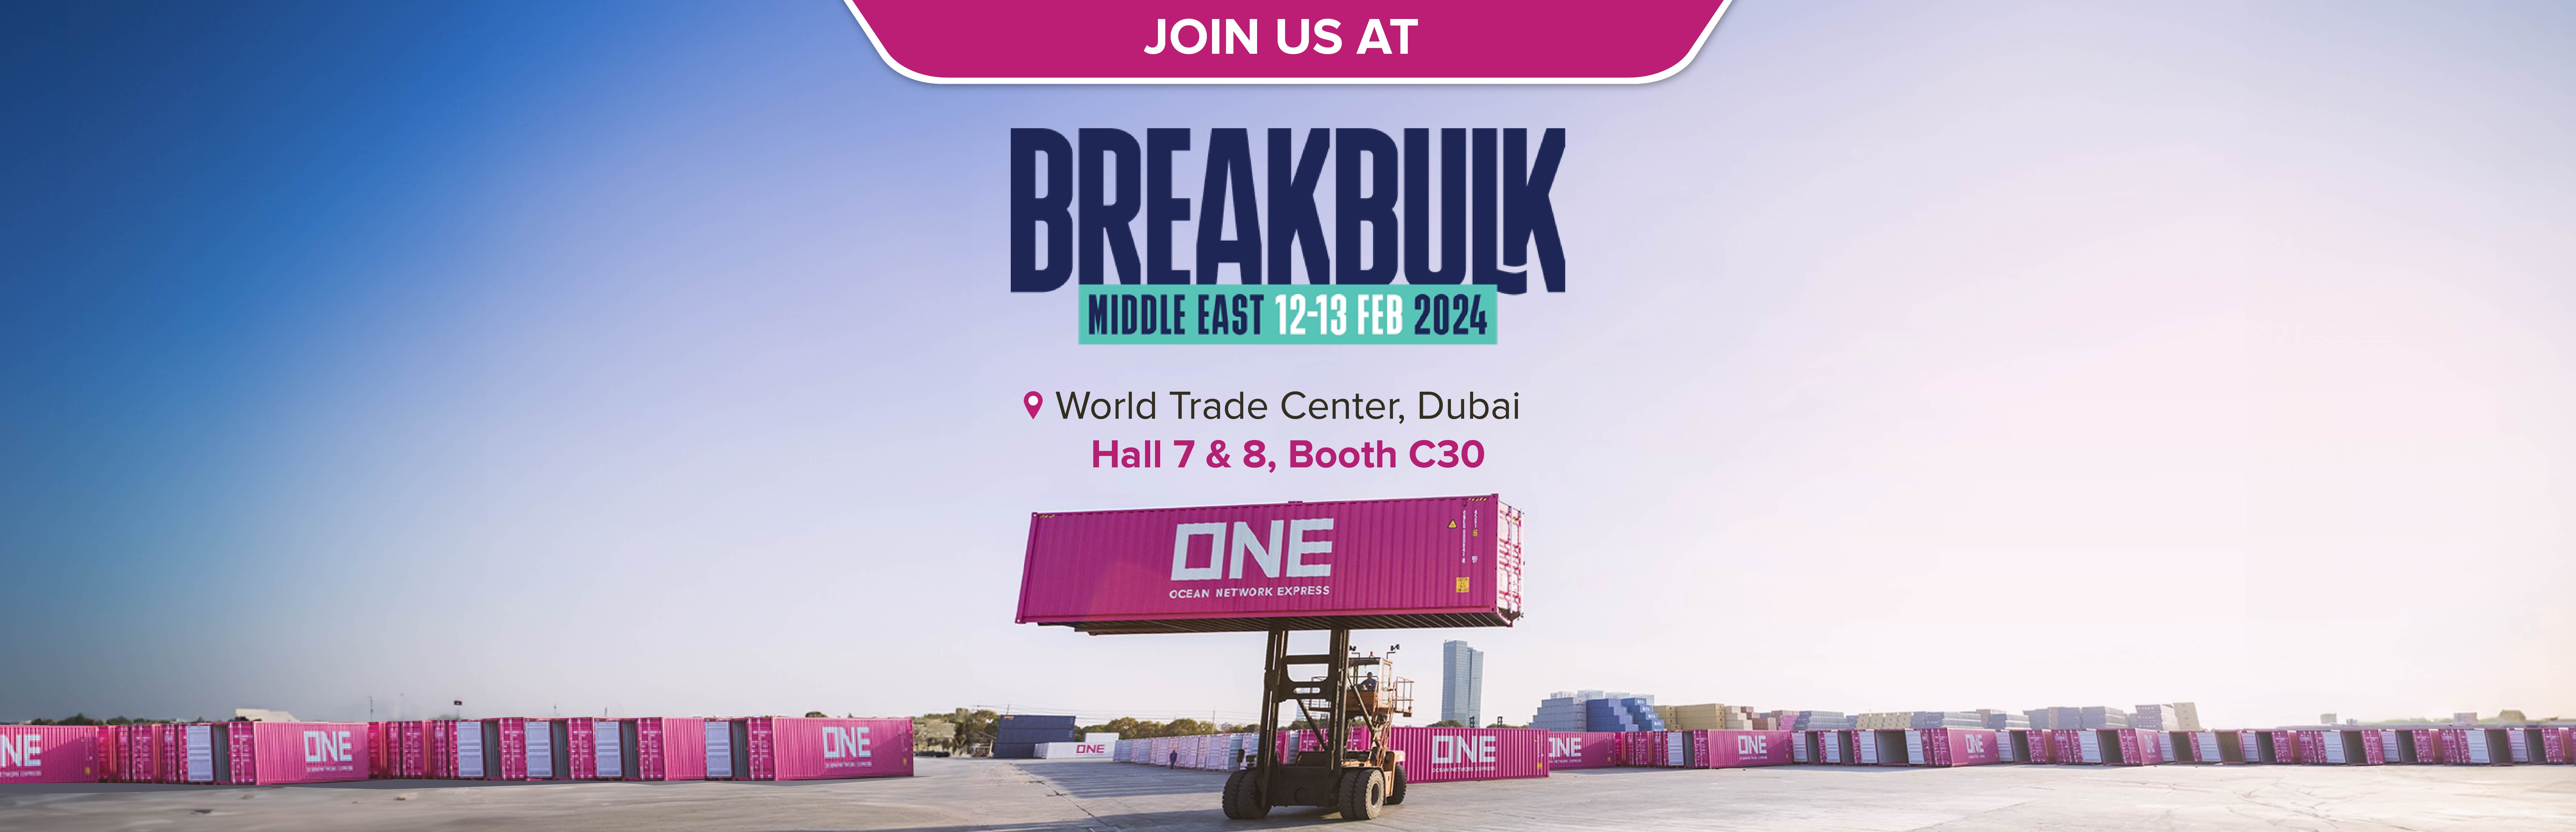 Breakbulk Middle East Event